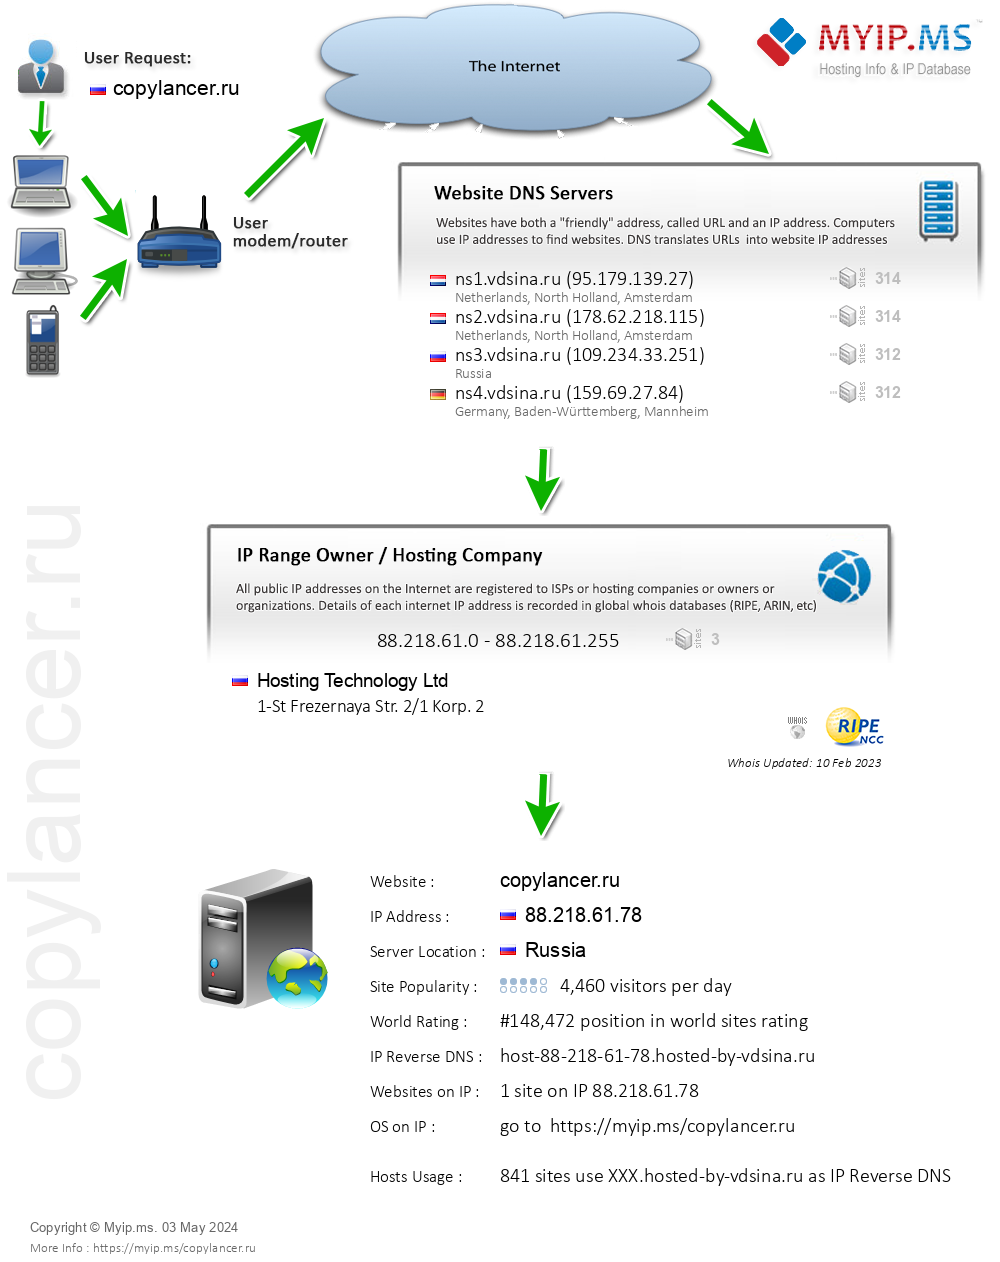 Copylancer.ru - Website Hosting Visual IP Diagram